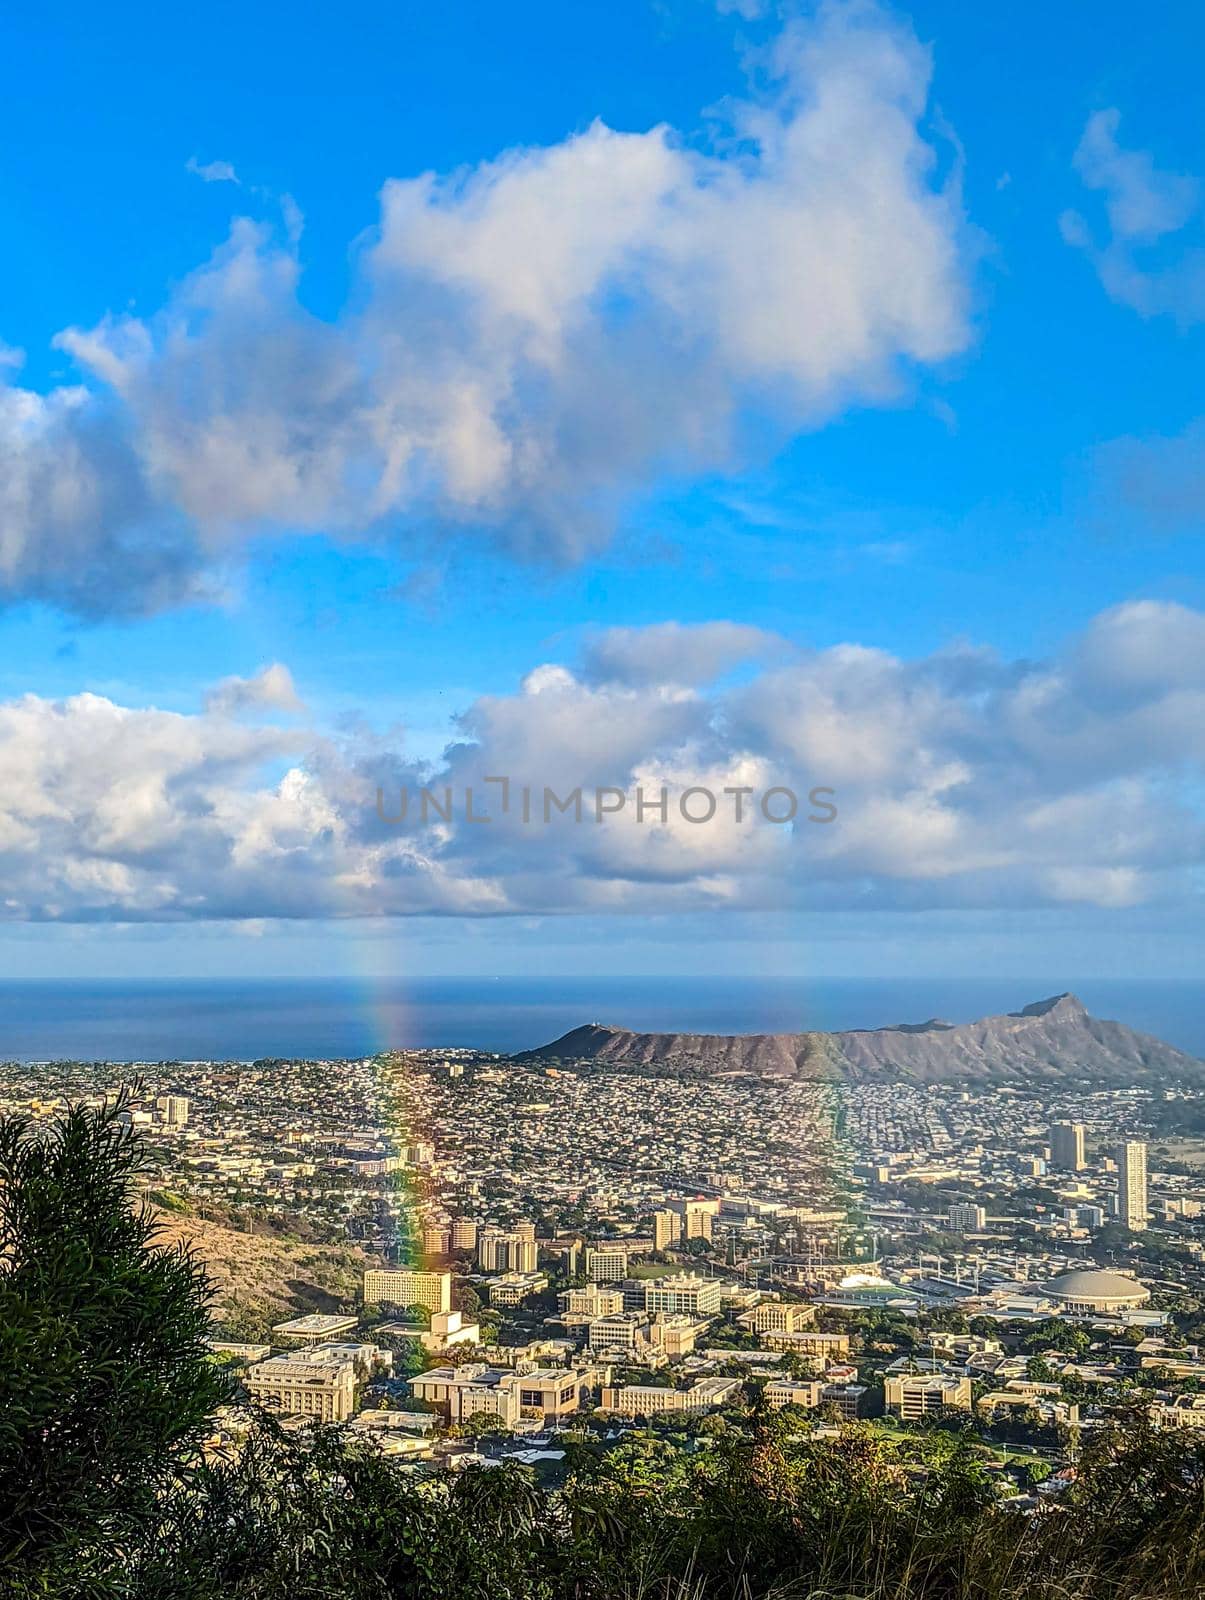  Waikiki and Honolulu from Tantalus Overlook on Oahu by digidreamgrafix